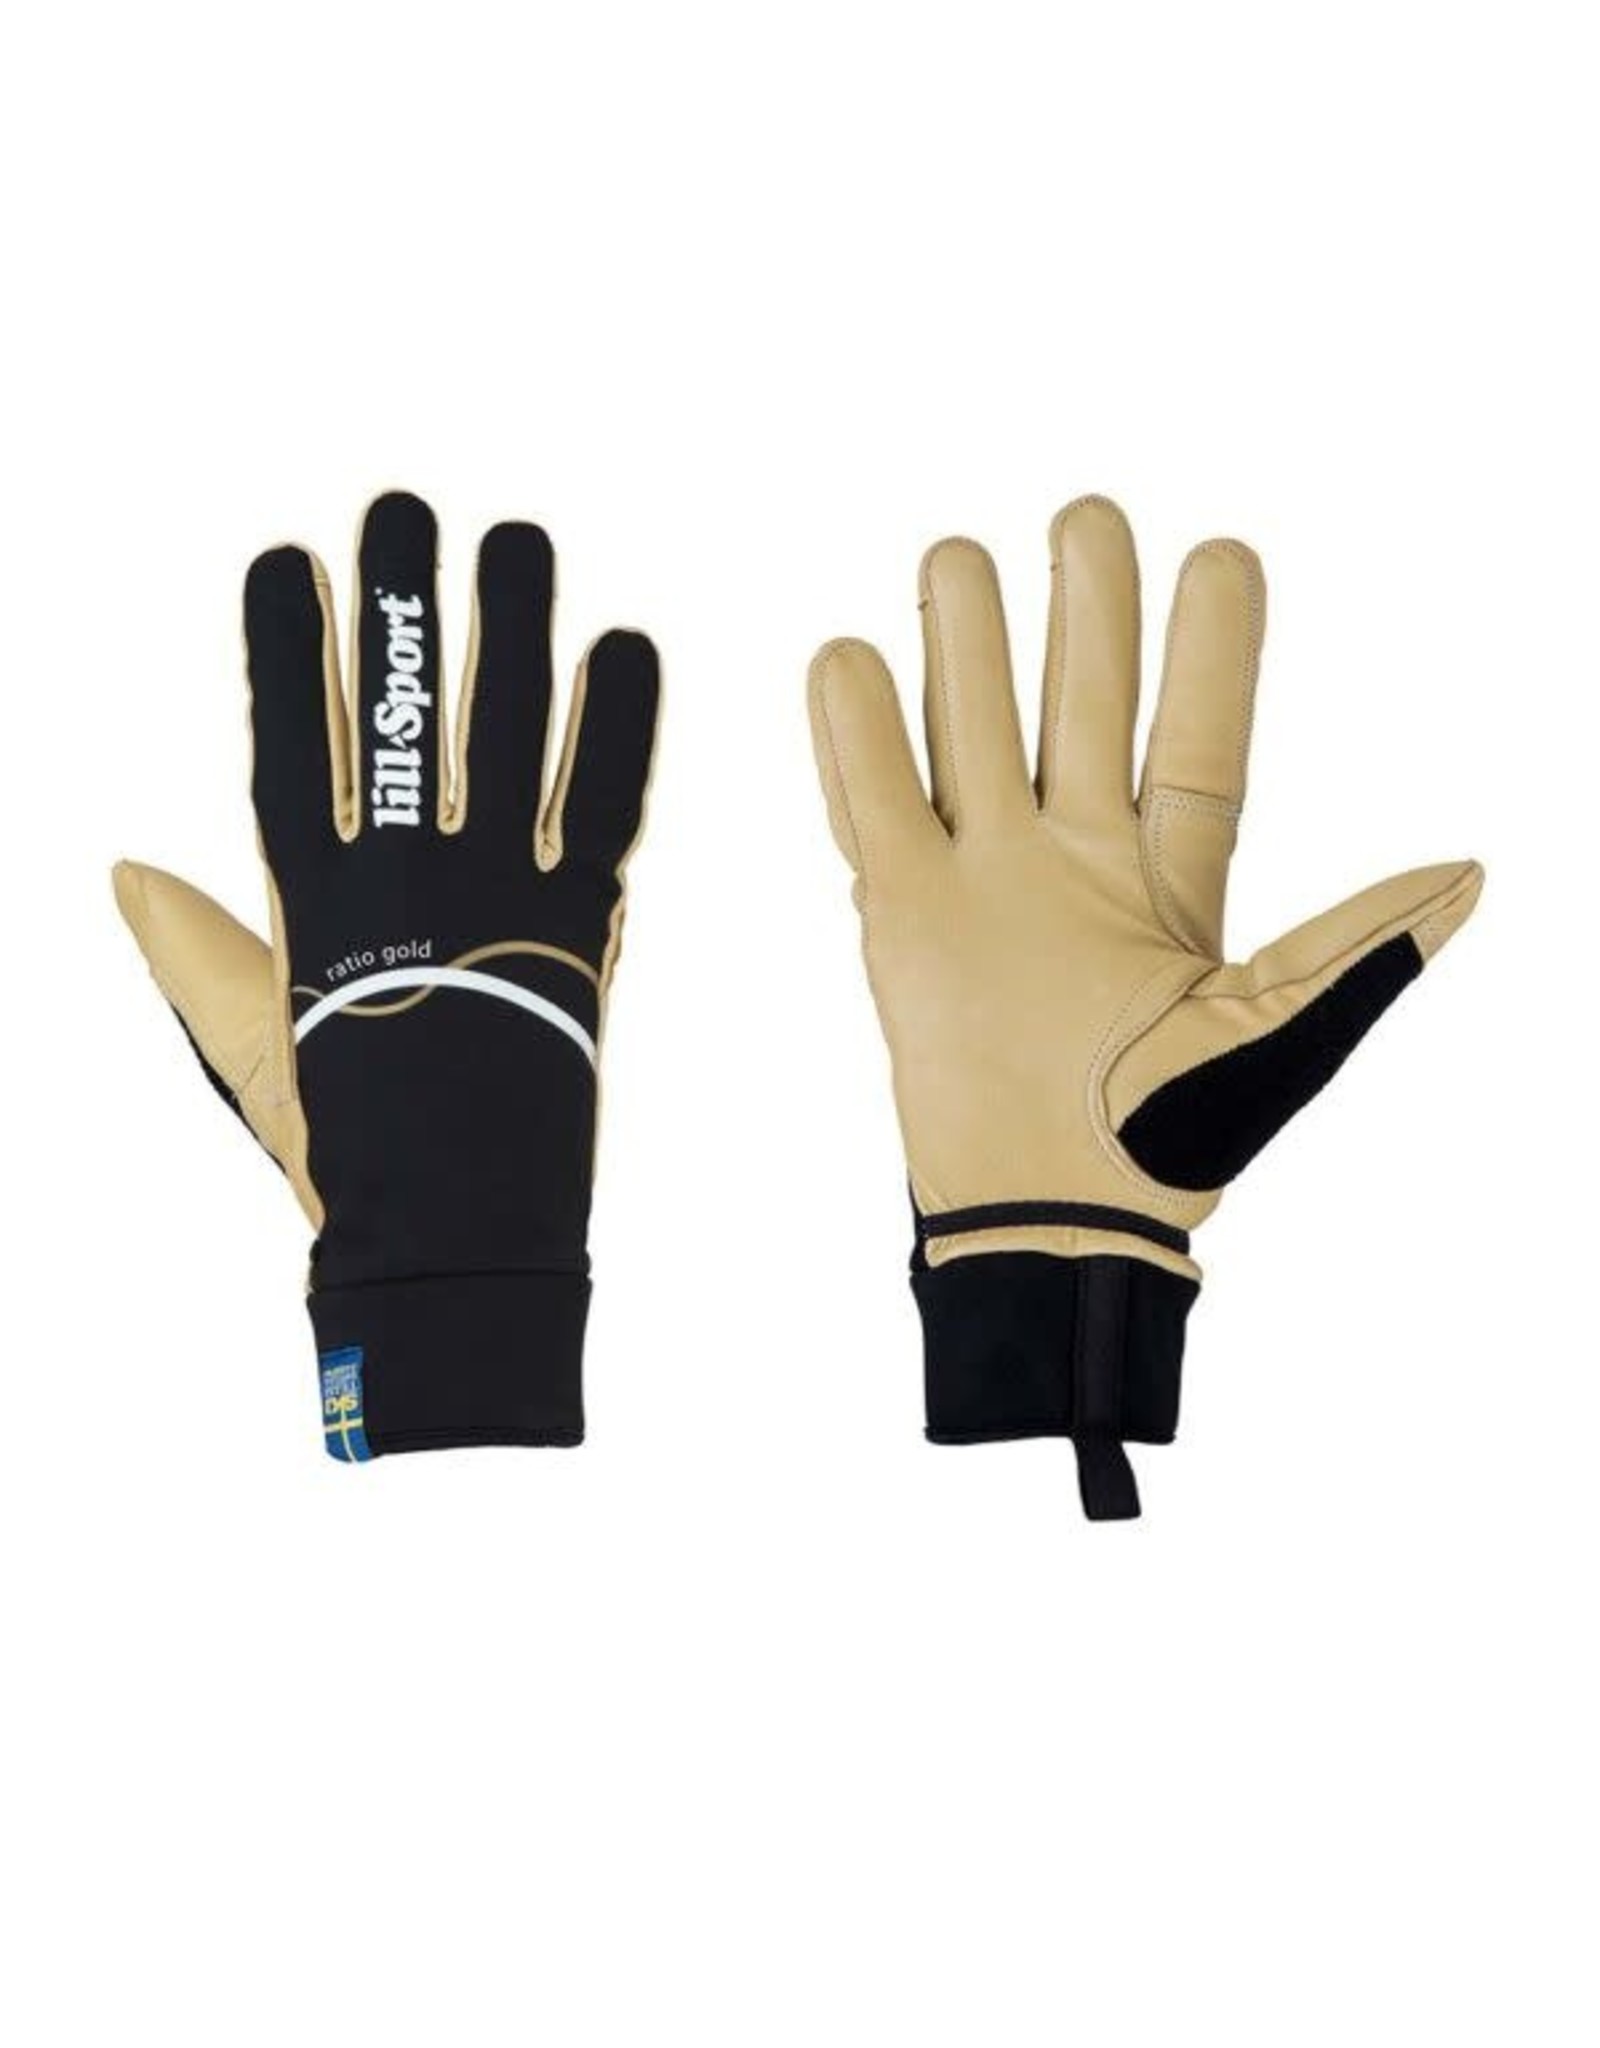 Lill-Sport Lill-Sport Ratio Gold Glove